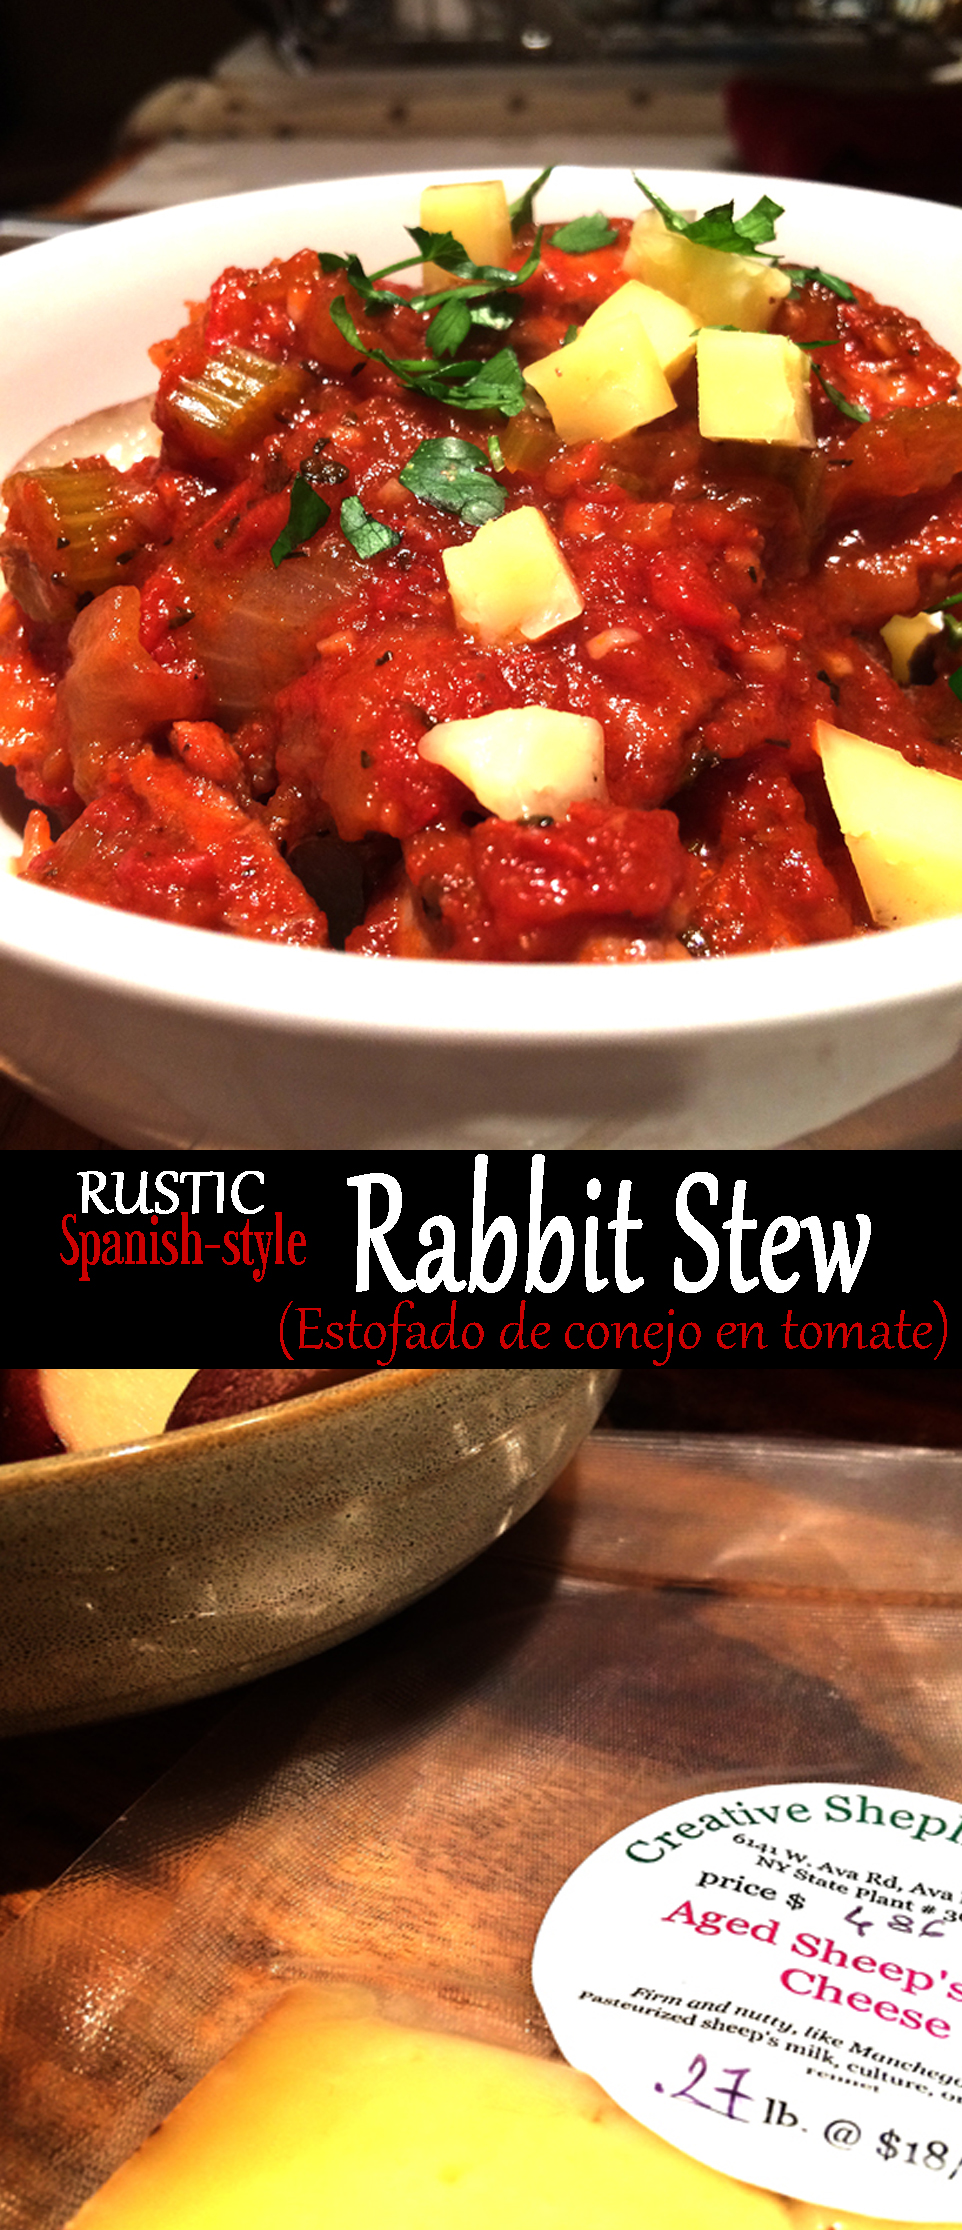 Rustic, Spanish Style Rabbit Stew (Paleo)